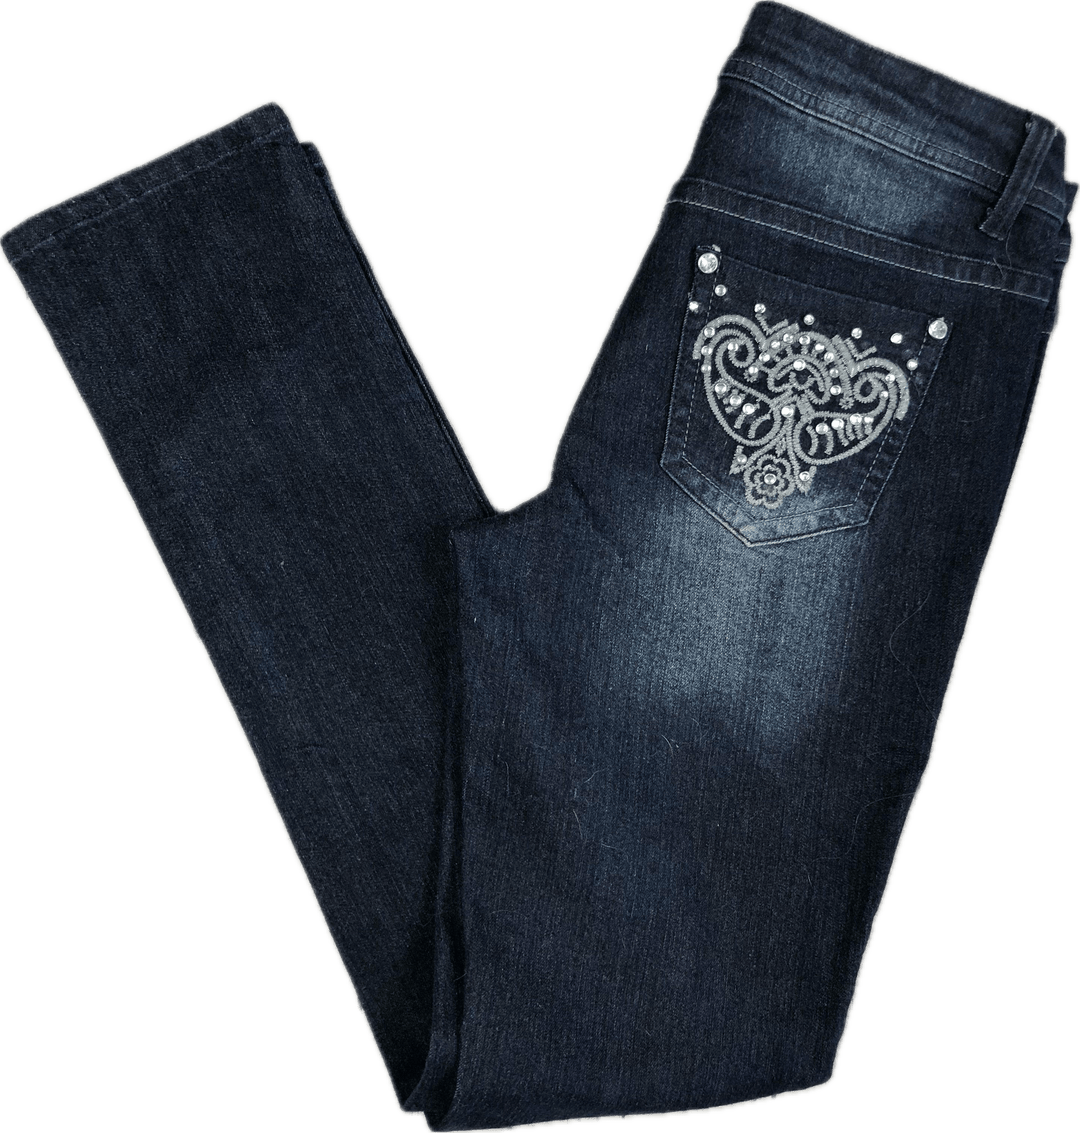 George Jewelled Rhinestone Pocket Skinny Jeans- Size 26 or 8AU - Jean Pool